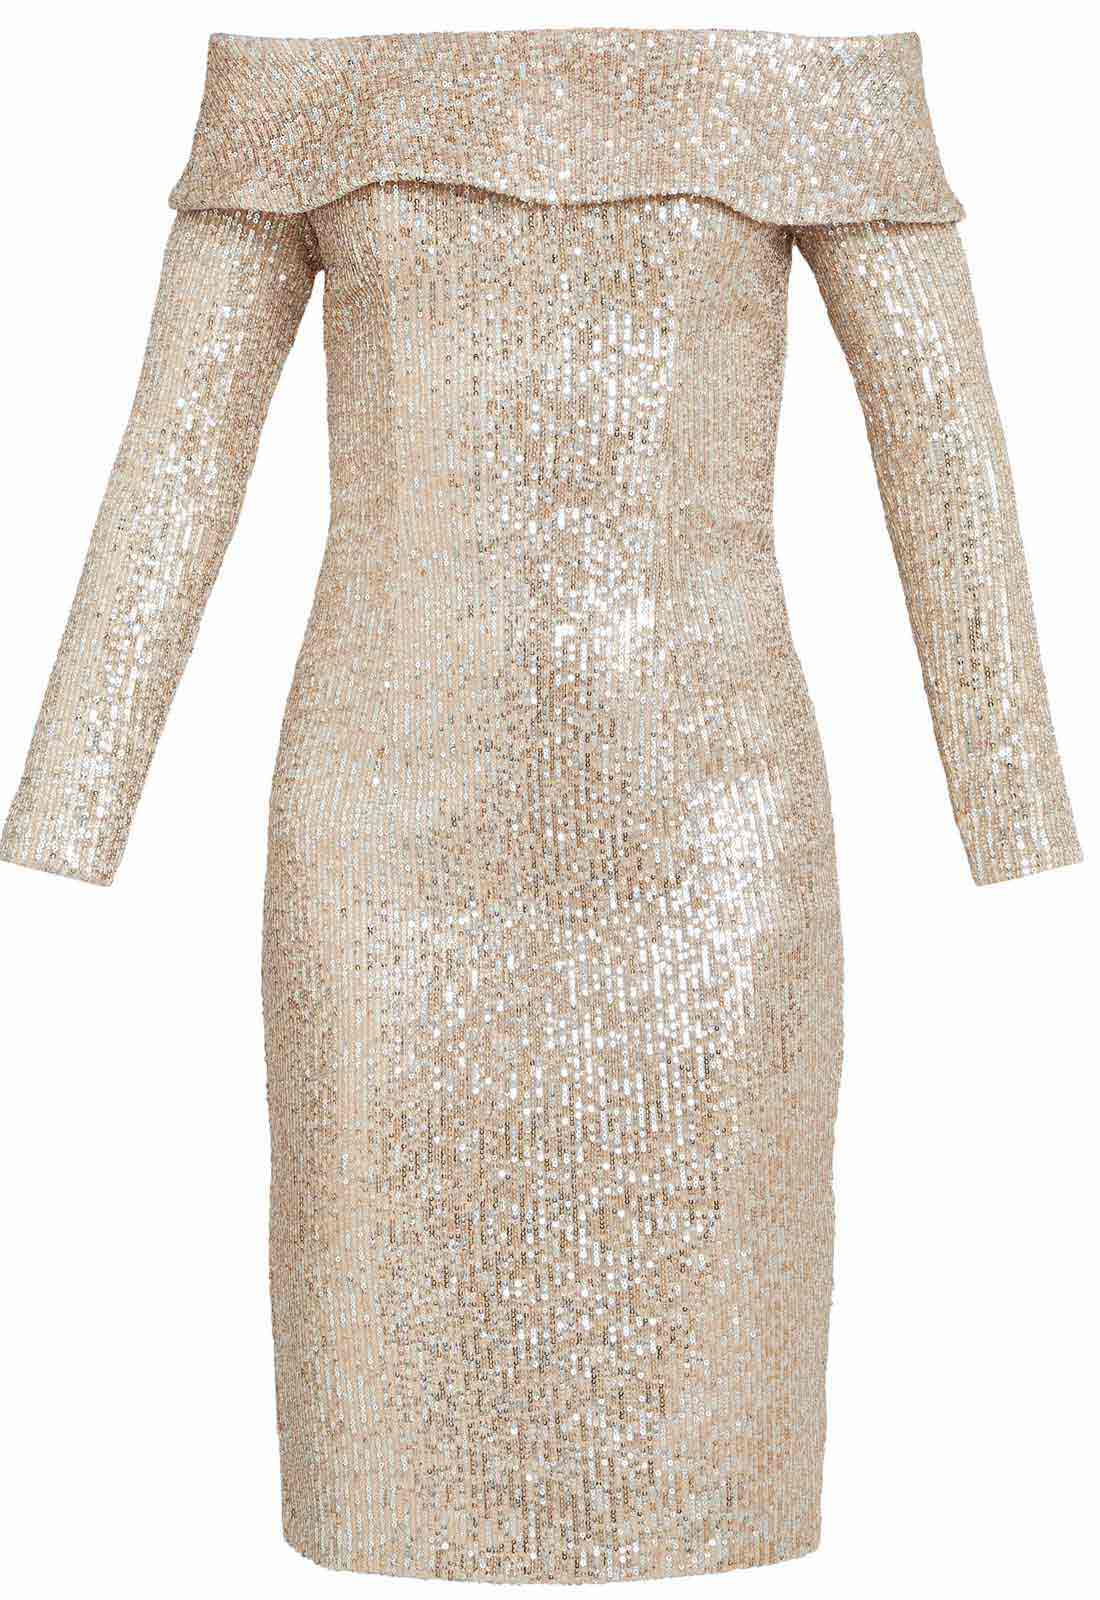 Gina Bacconi Gold Anthea Off The Shoulder Sequin Dress